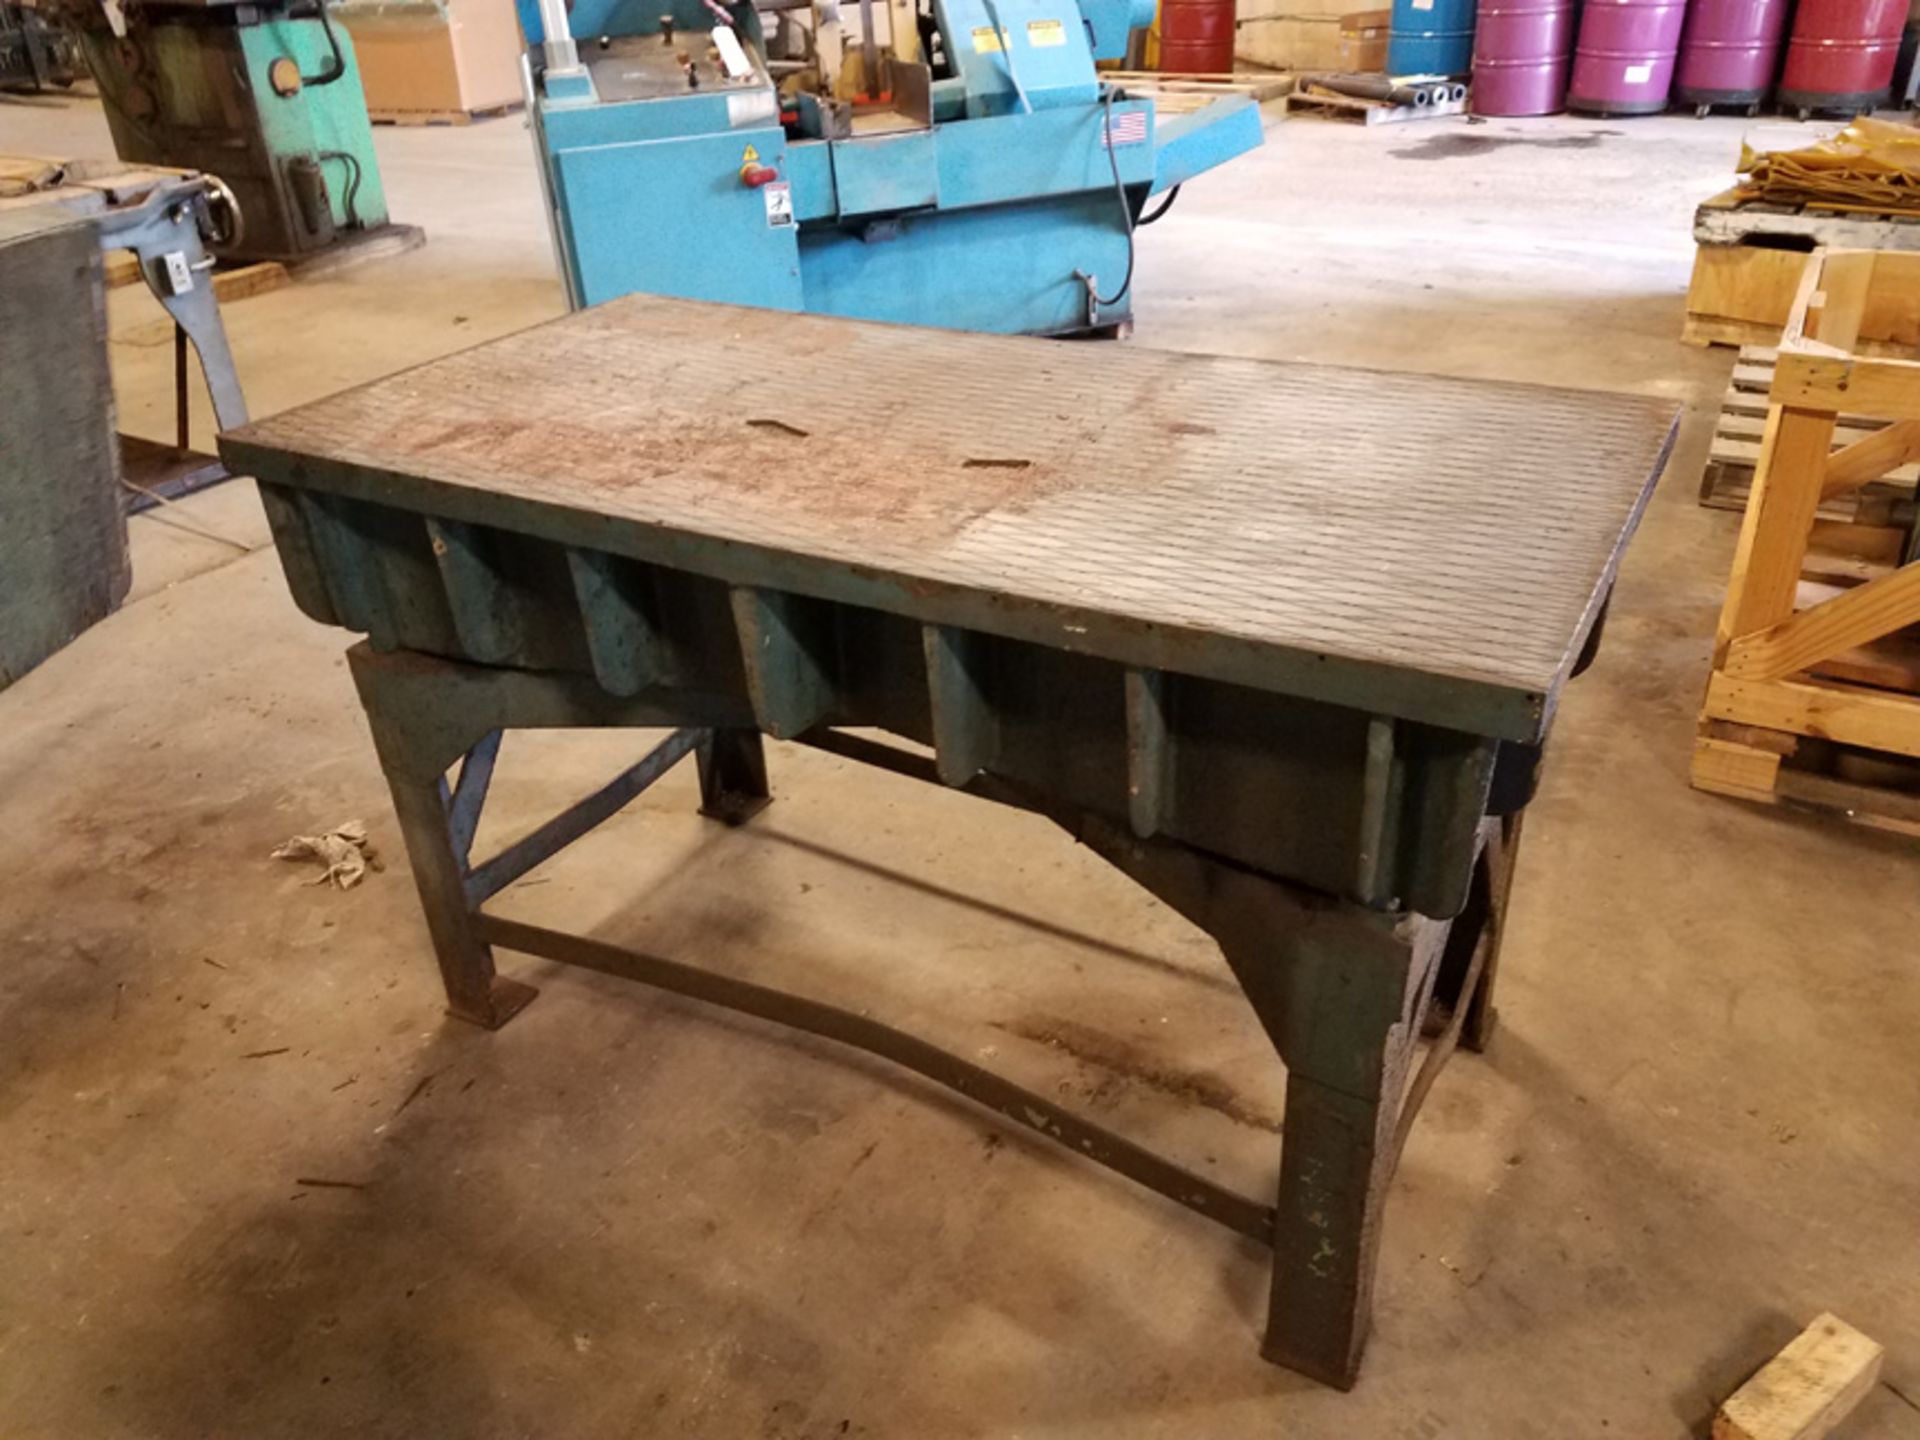 60" x 30" Welding Table